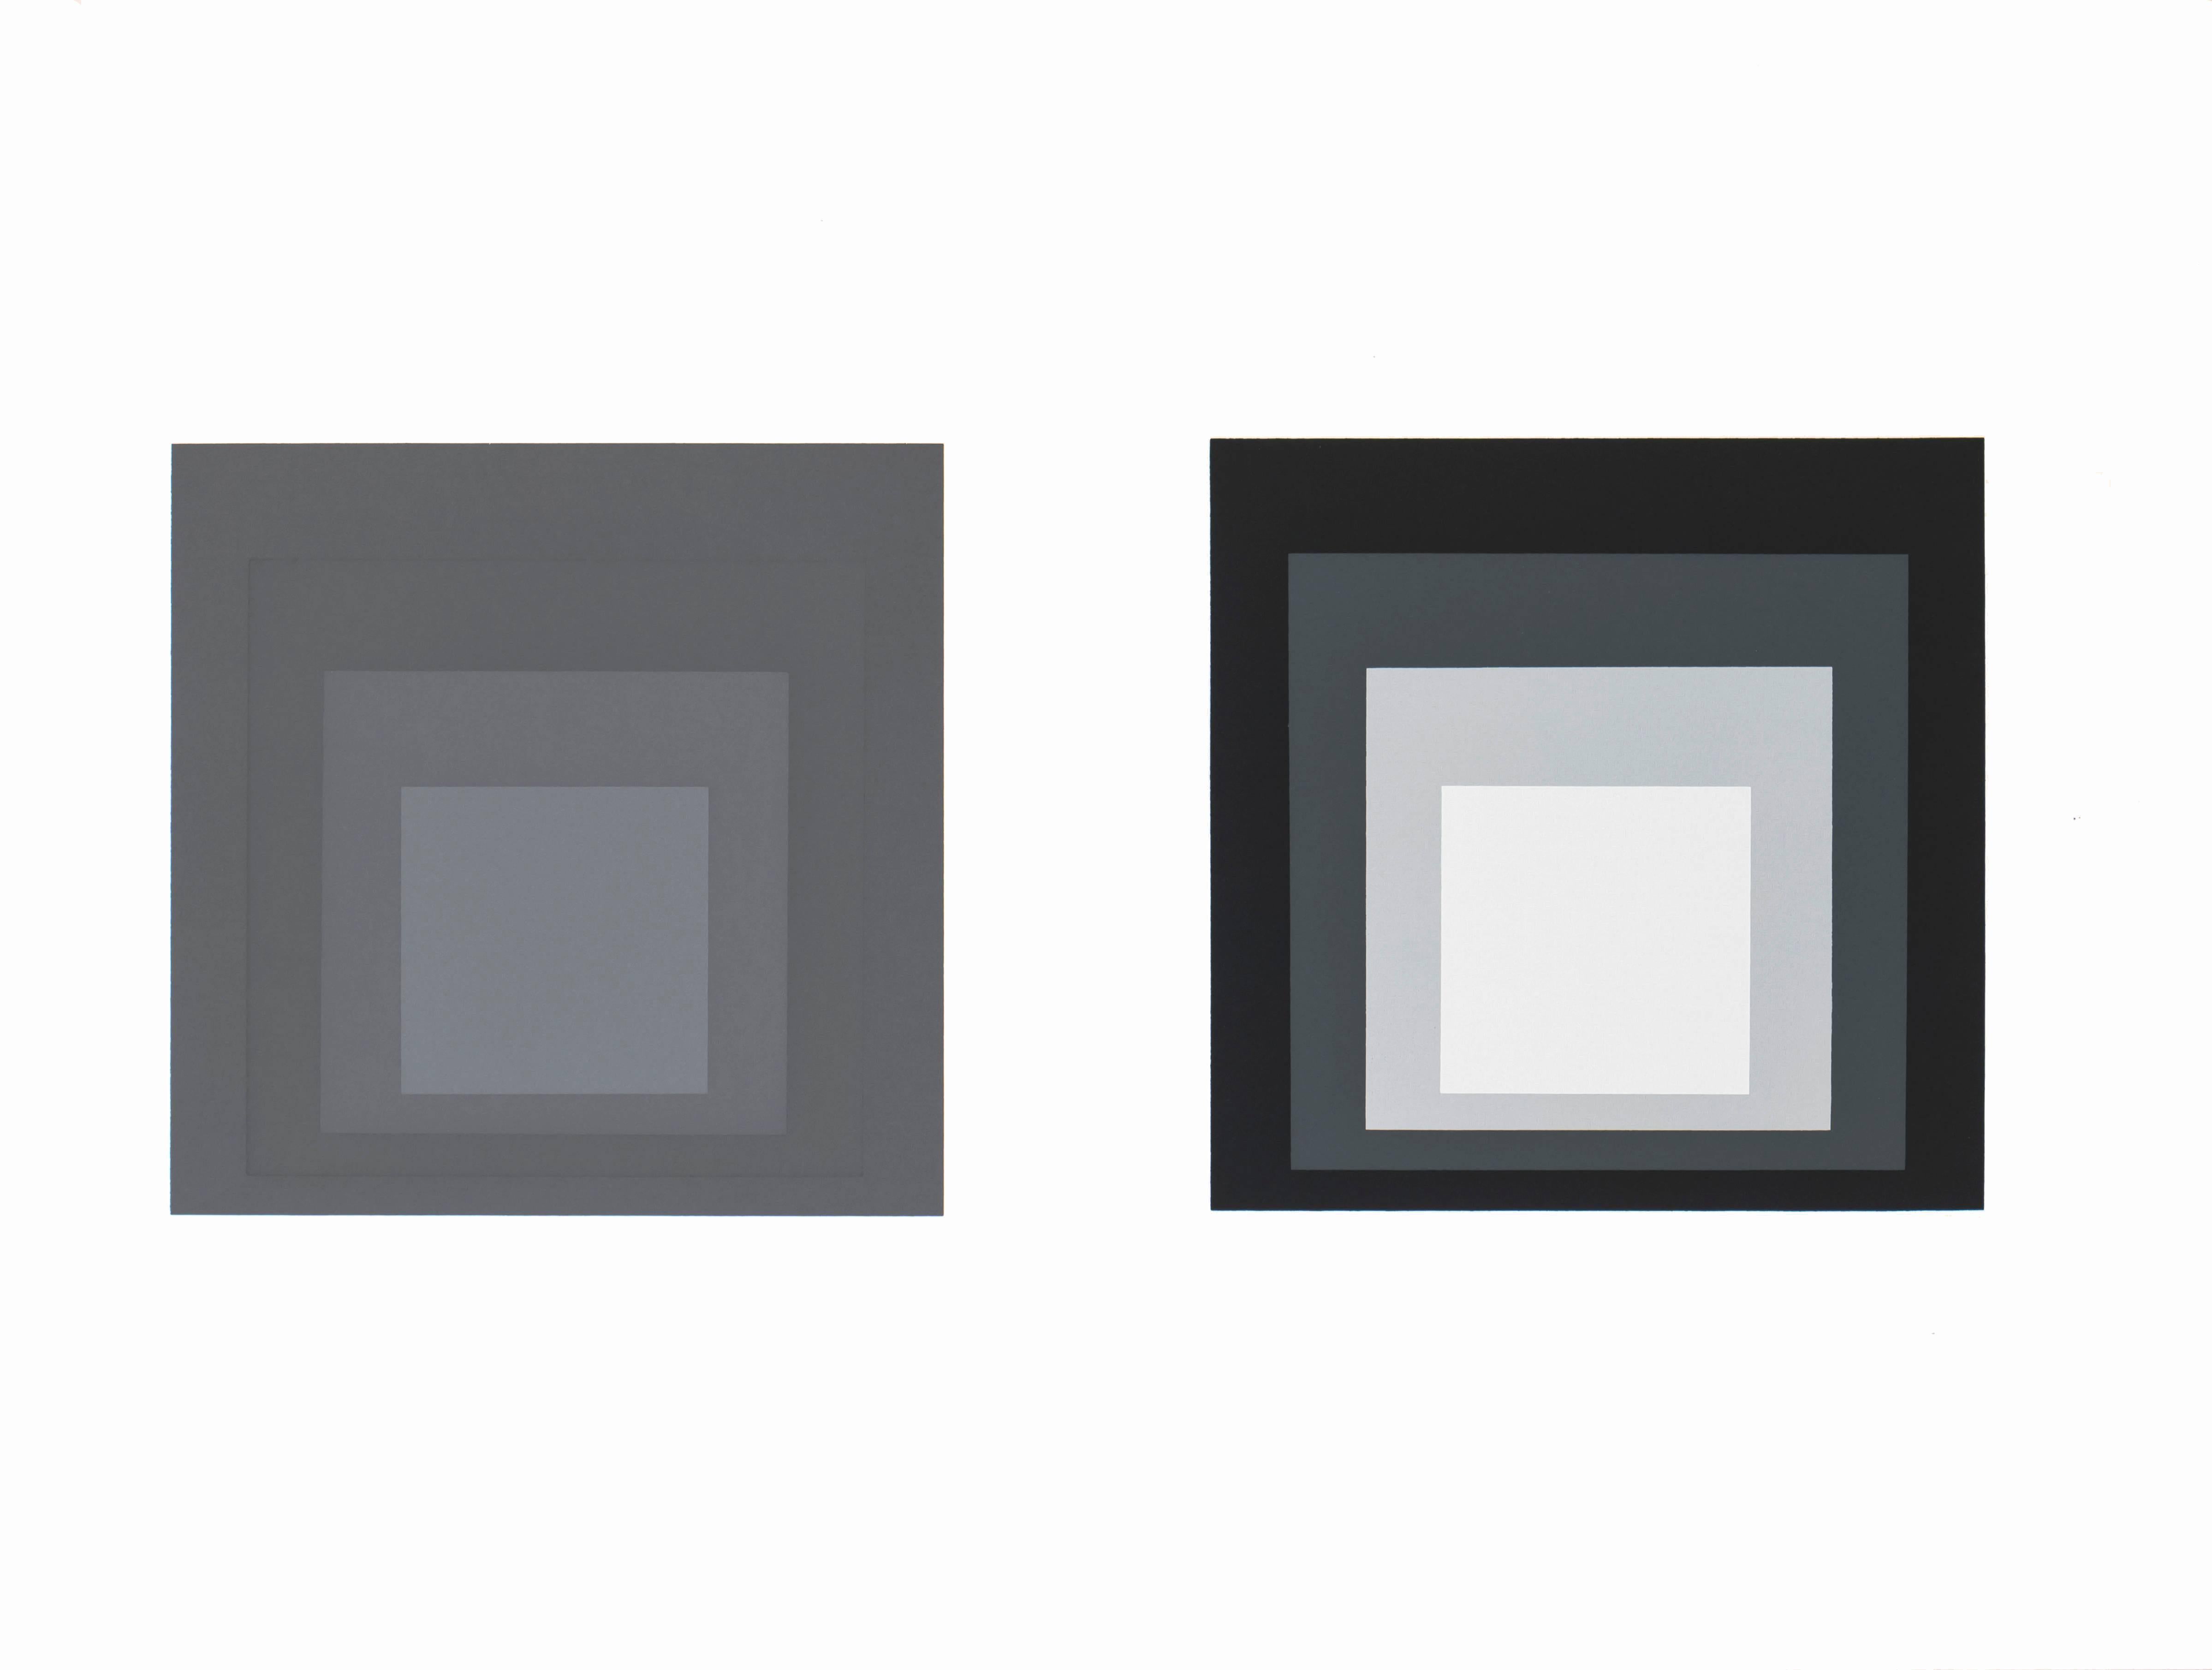 Josef Albers Abstract Print - Formulation : Articulation, Portfolio I, Folder 23 (B) "Homage to the Square"